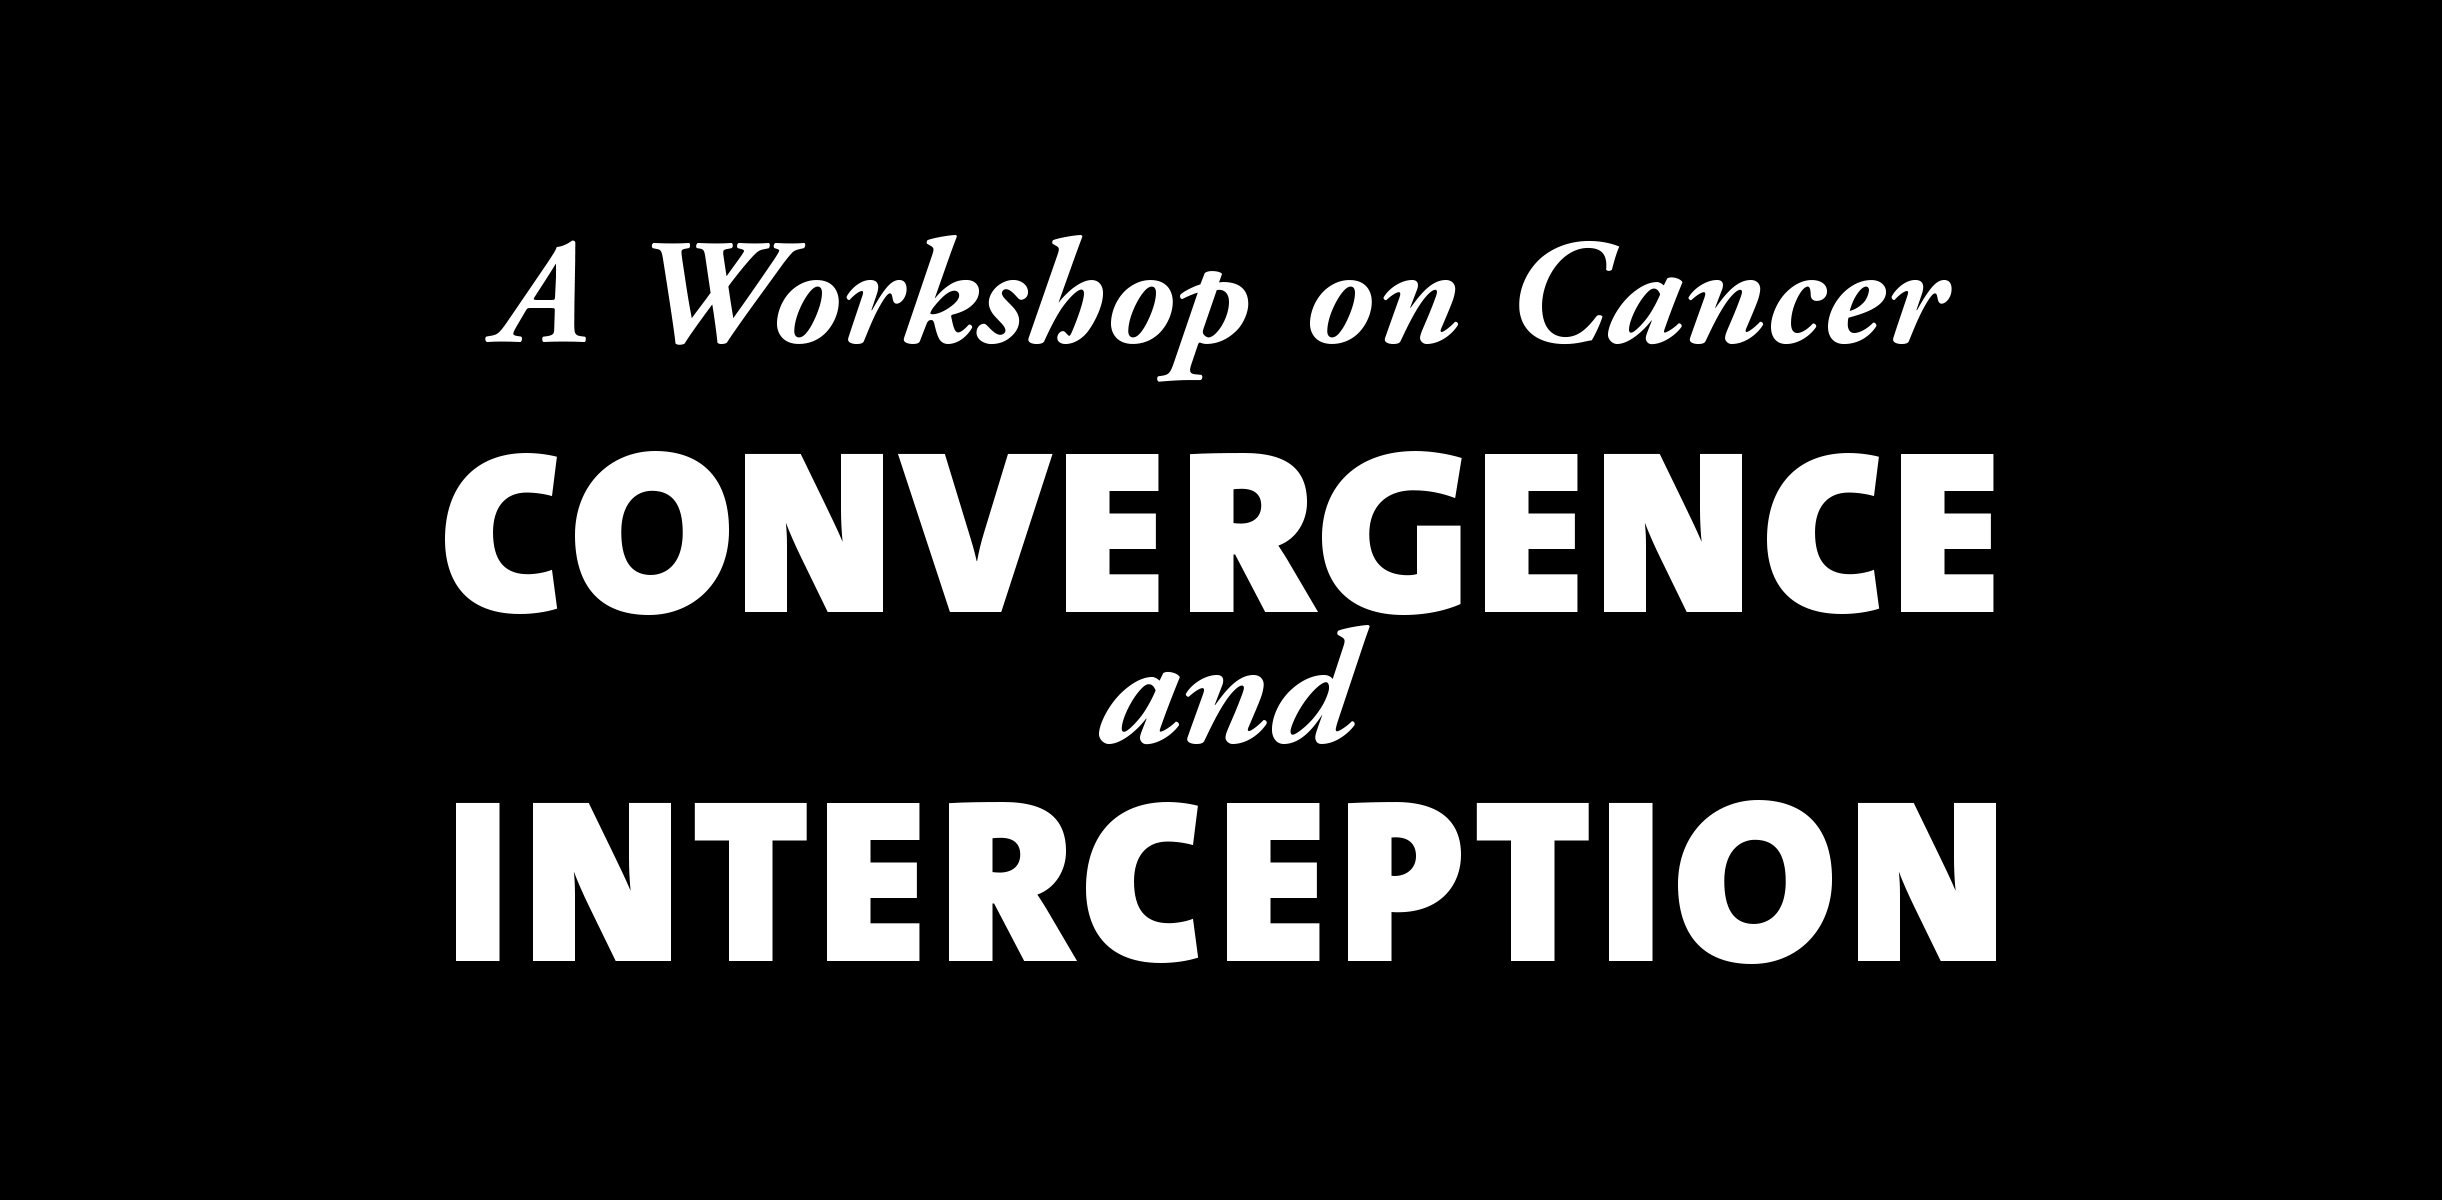 Logo designed for workshop and used on cover of Program Booklet for Academic Cancer Workshop – designed and produced by SP STUDIOS.